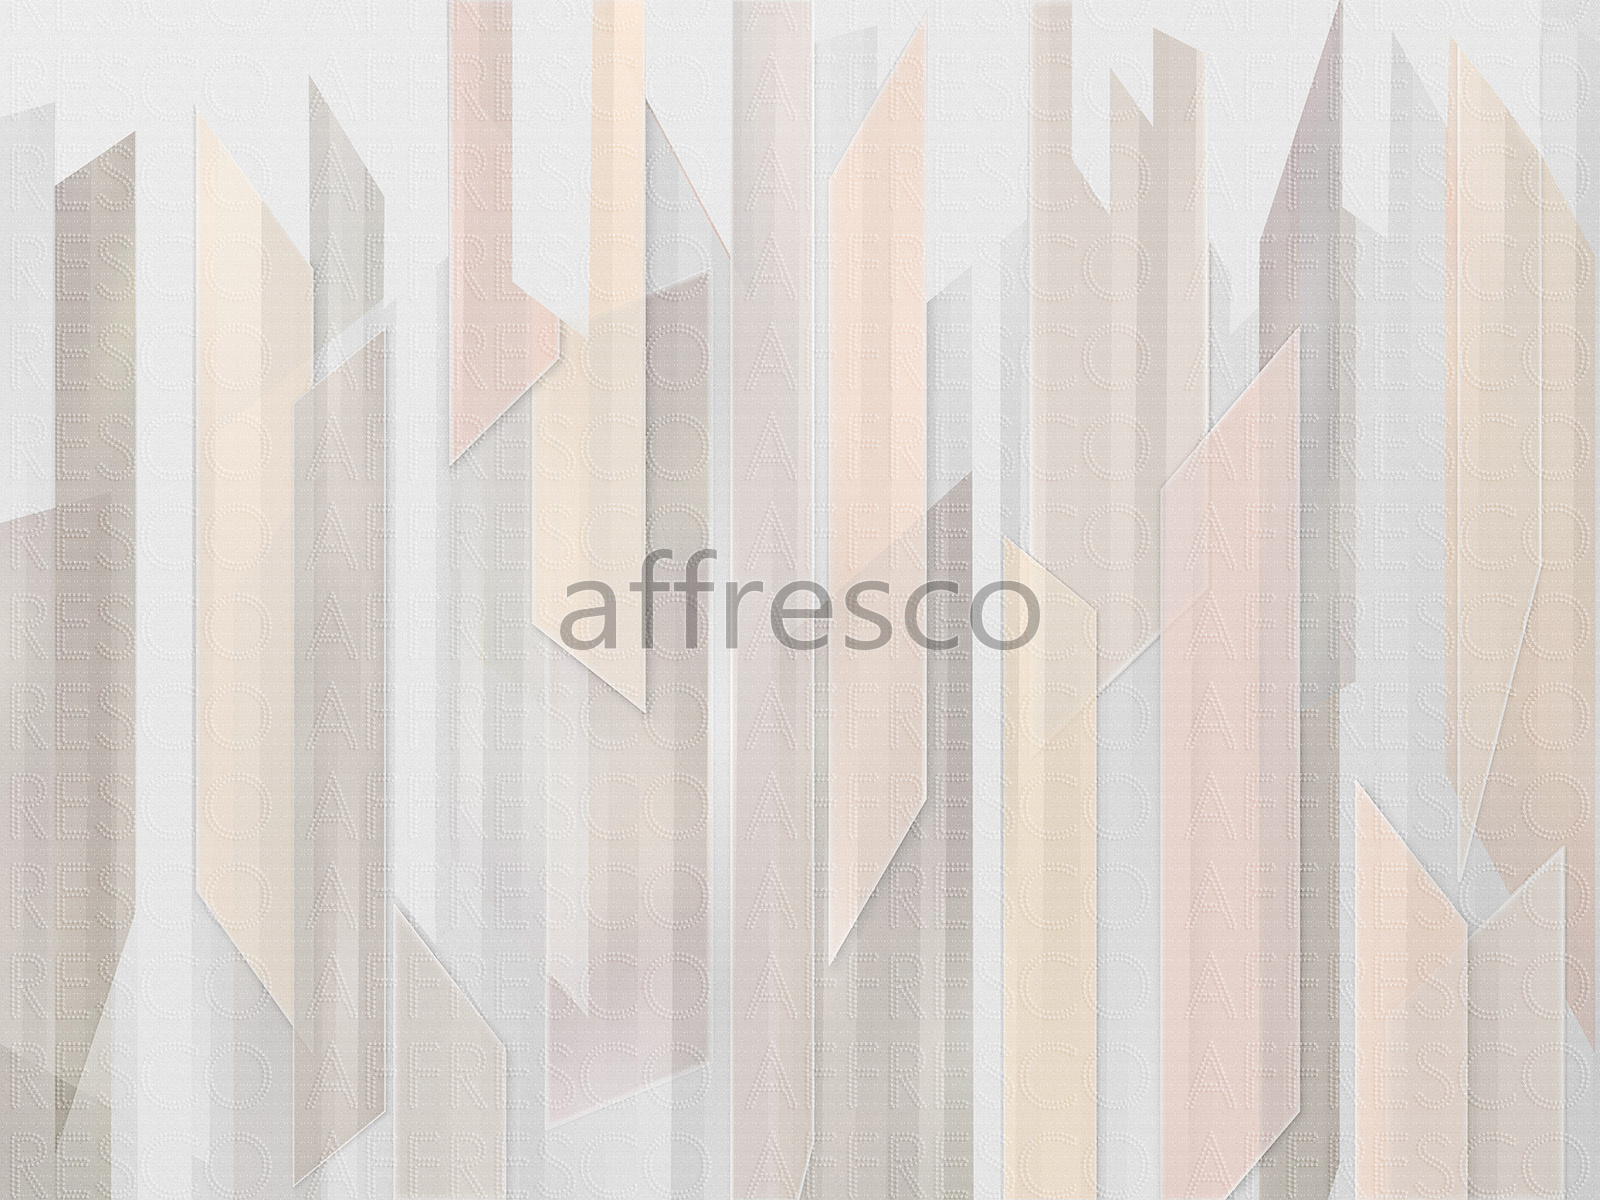 RE922-COL4 | Fine Art | Affresco Factory